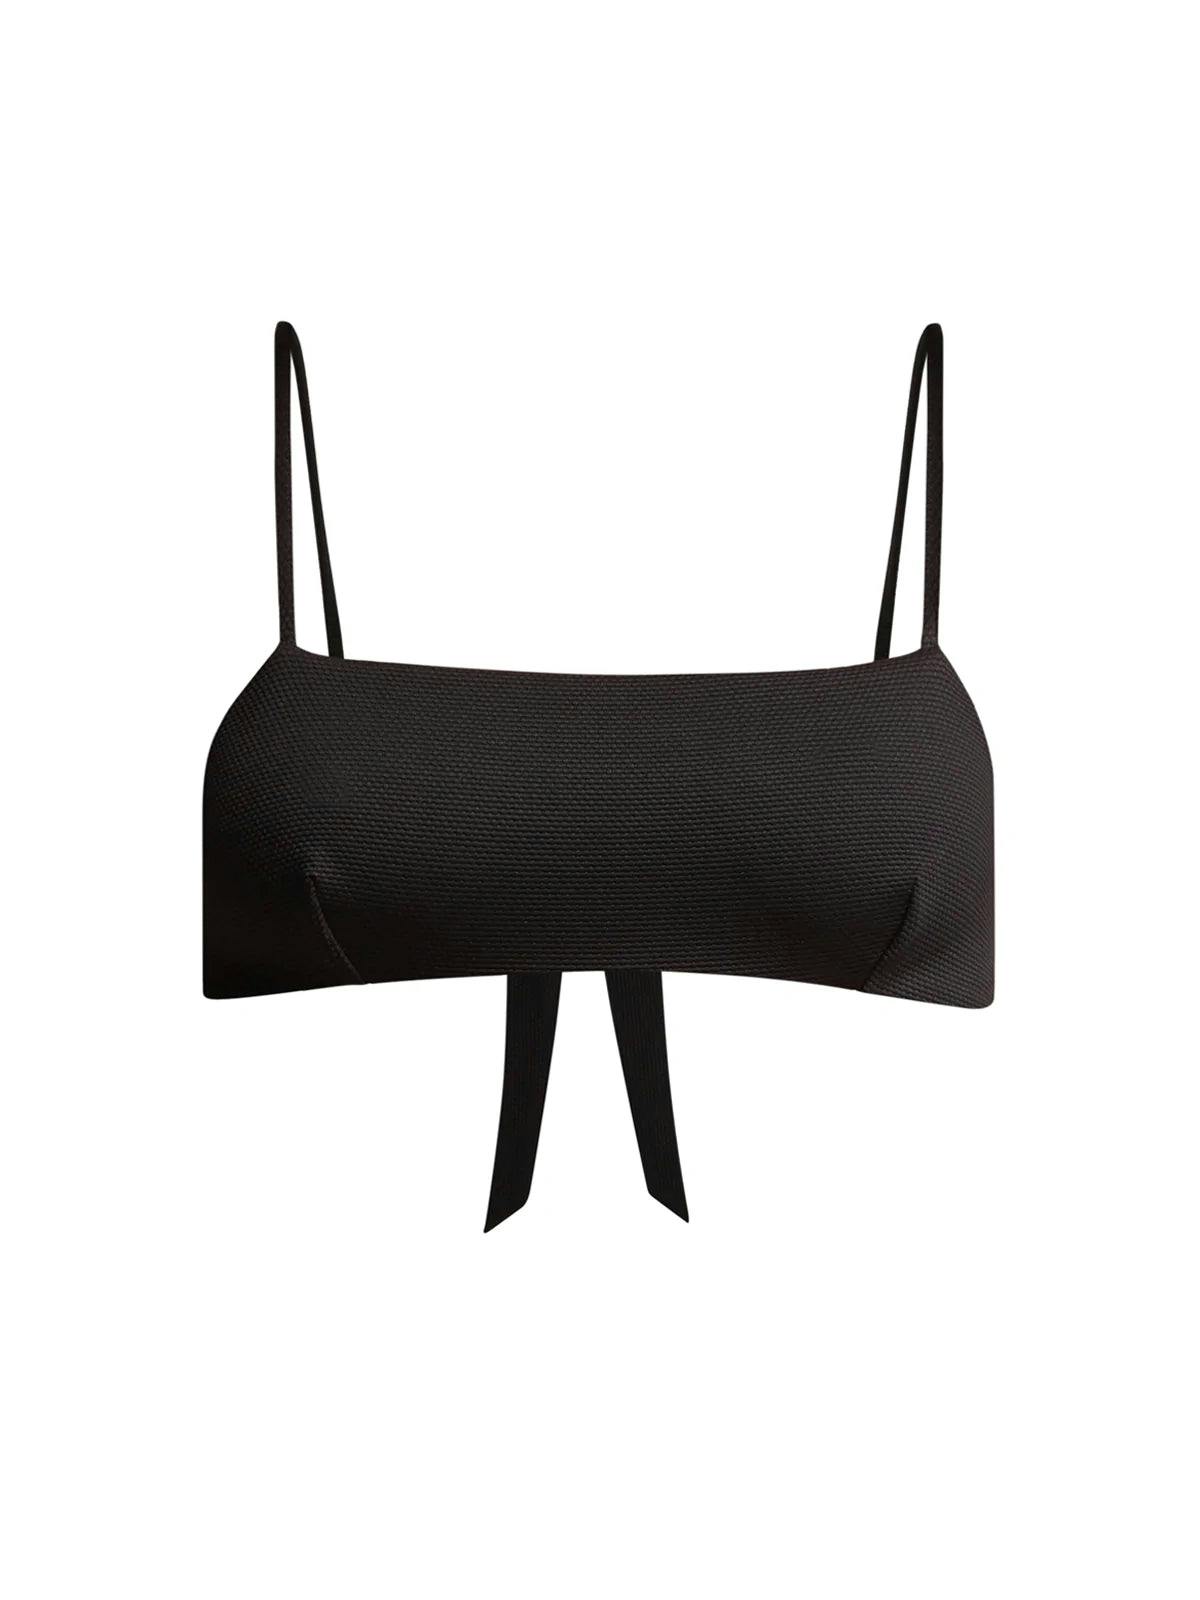 Ana black bikini top